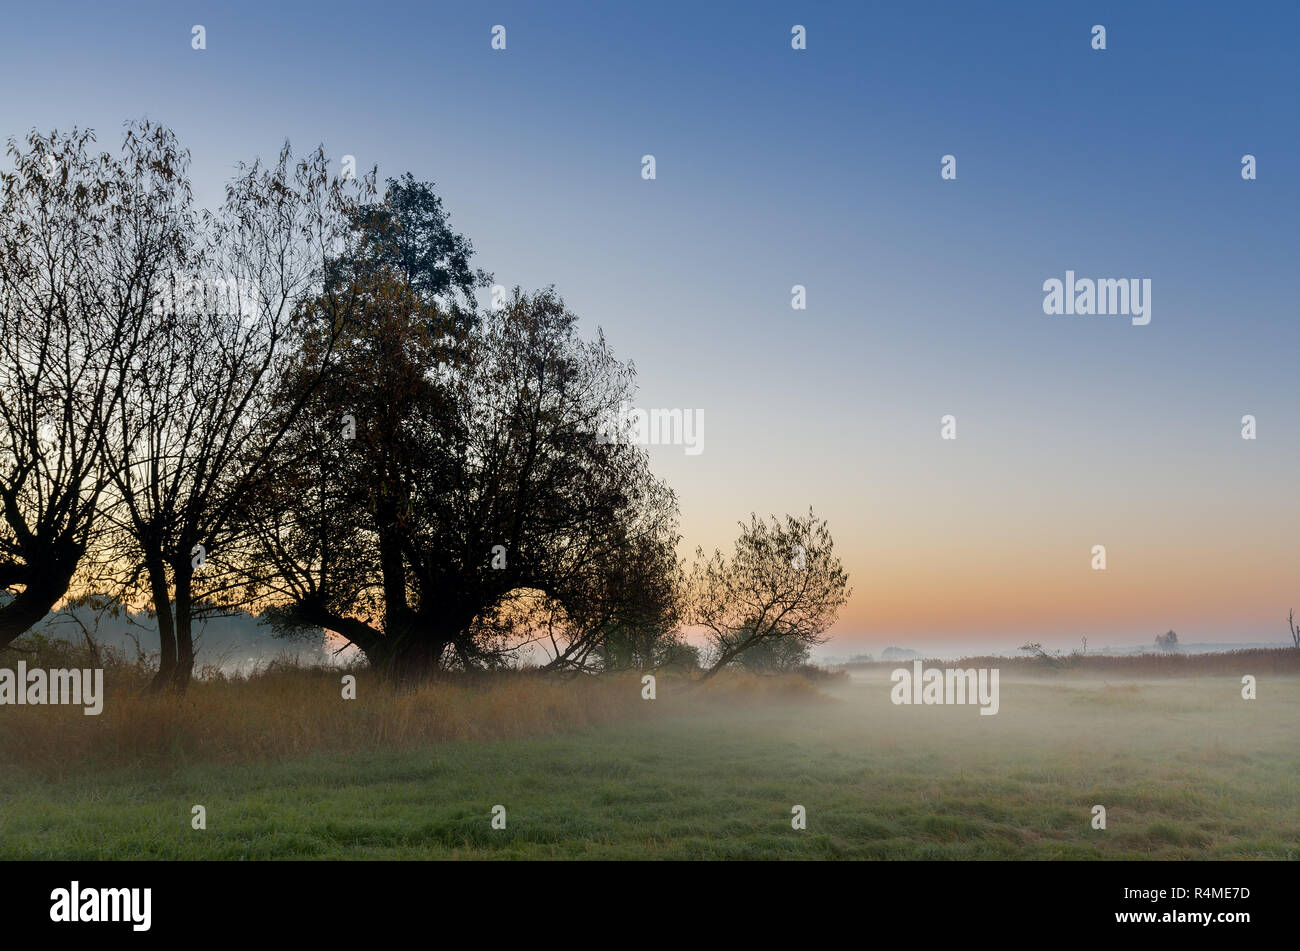 Amanecer otoñal a mediados de forest meadow. Lasocin, Polonia, Mazovia provincia. Foto de stock